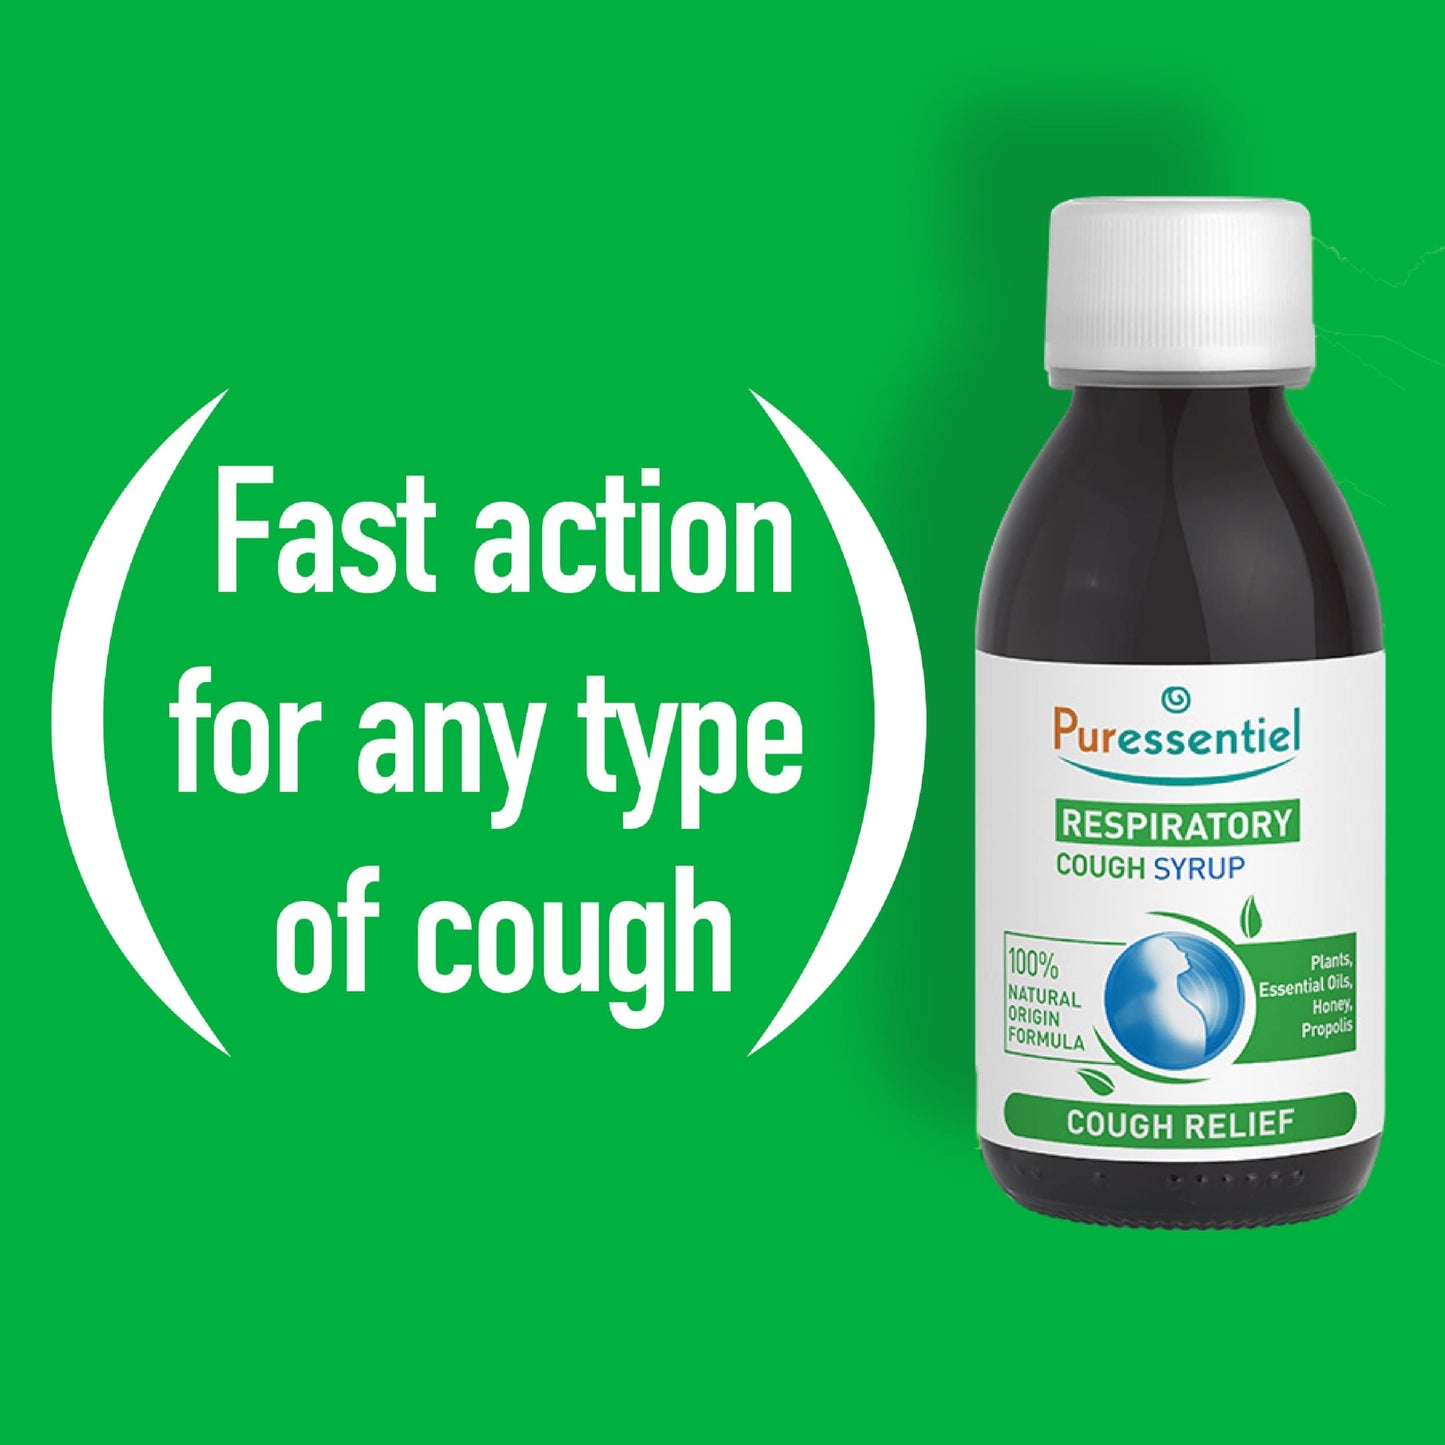 Puressentiel Respiratory Throat Syrup - 125 ml. 4 EOBBD Essential Oils